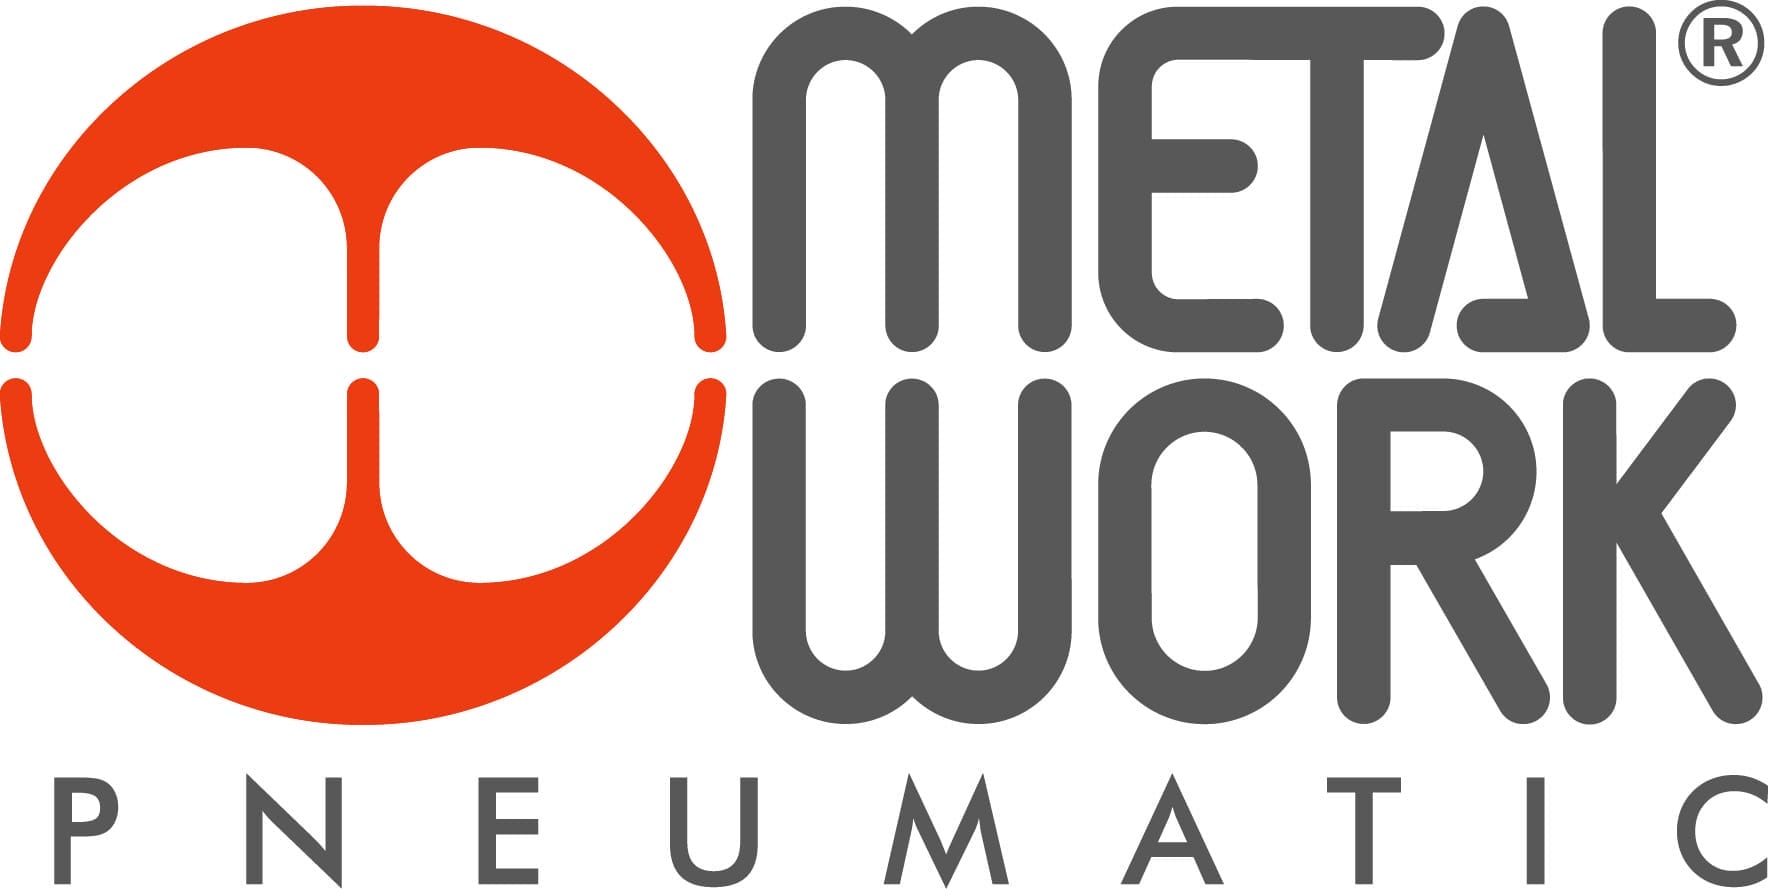 Metal Work Pneumatic - Womack Supplier